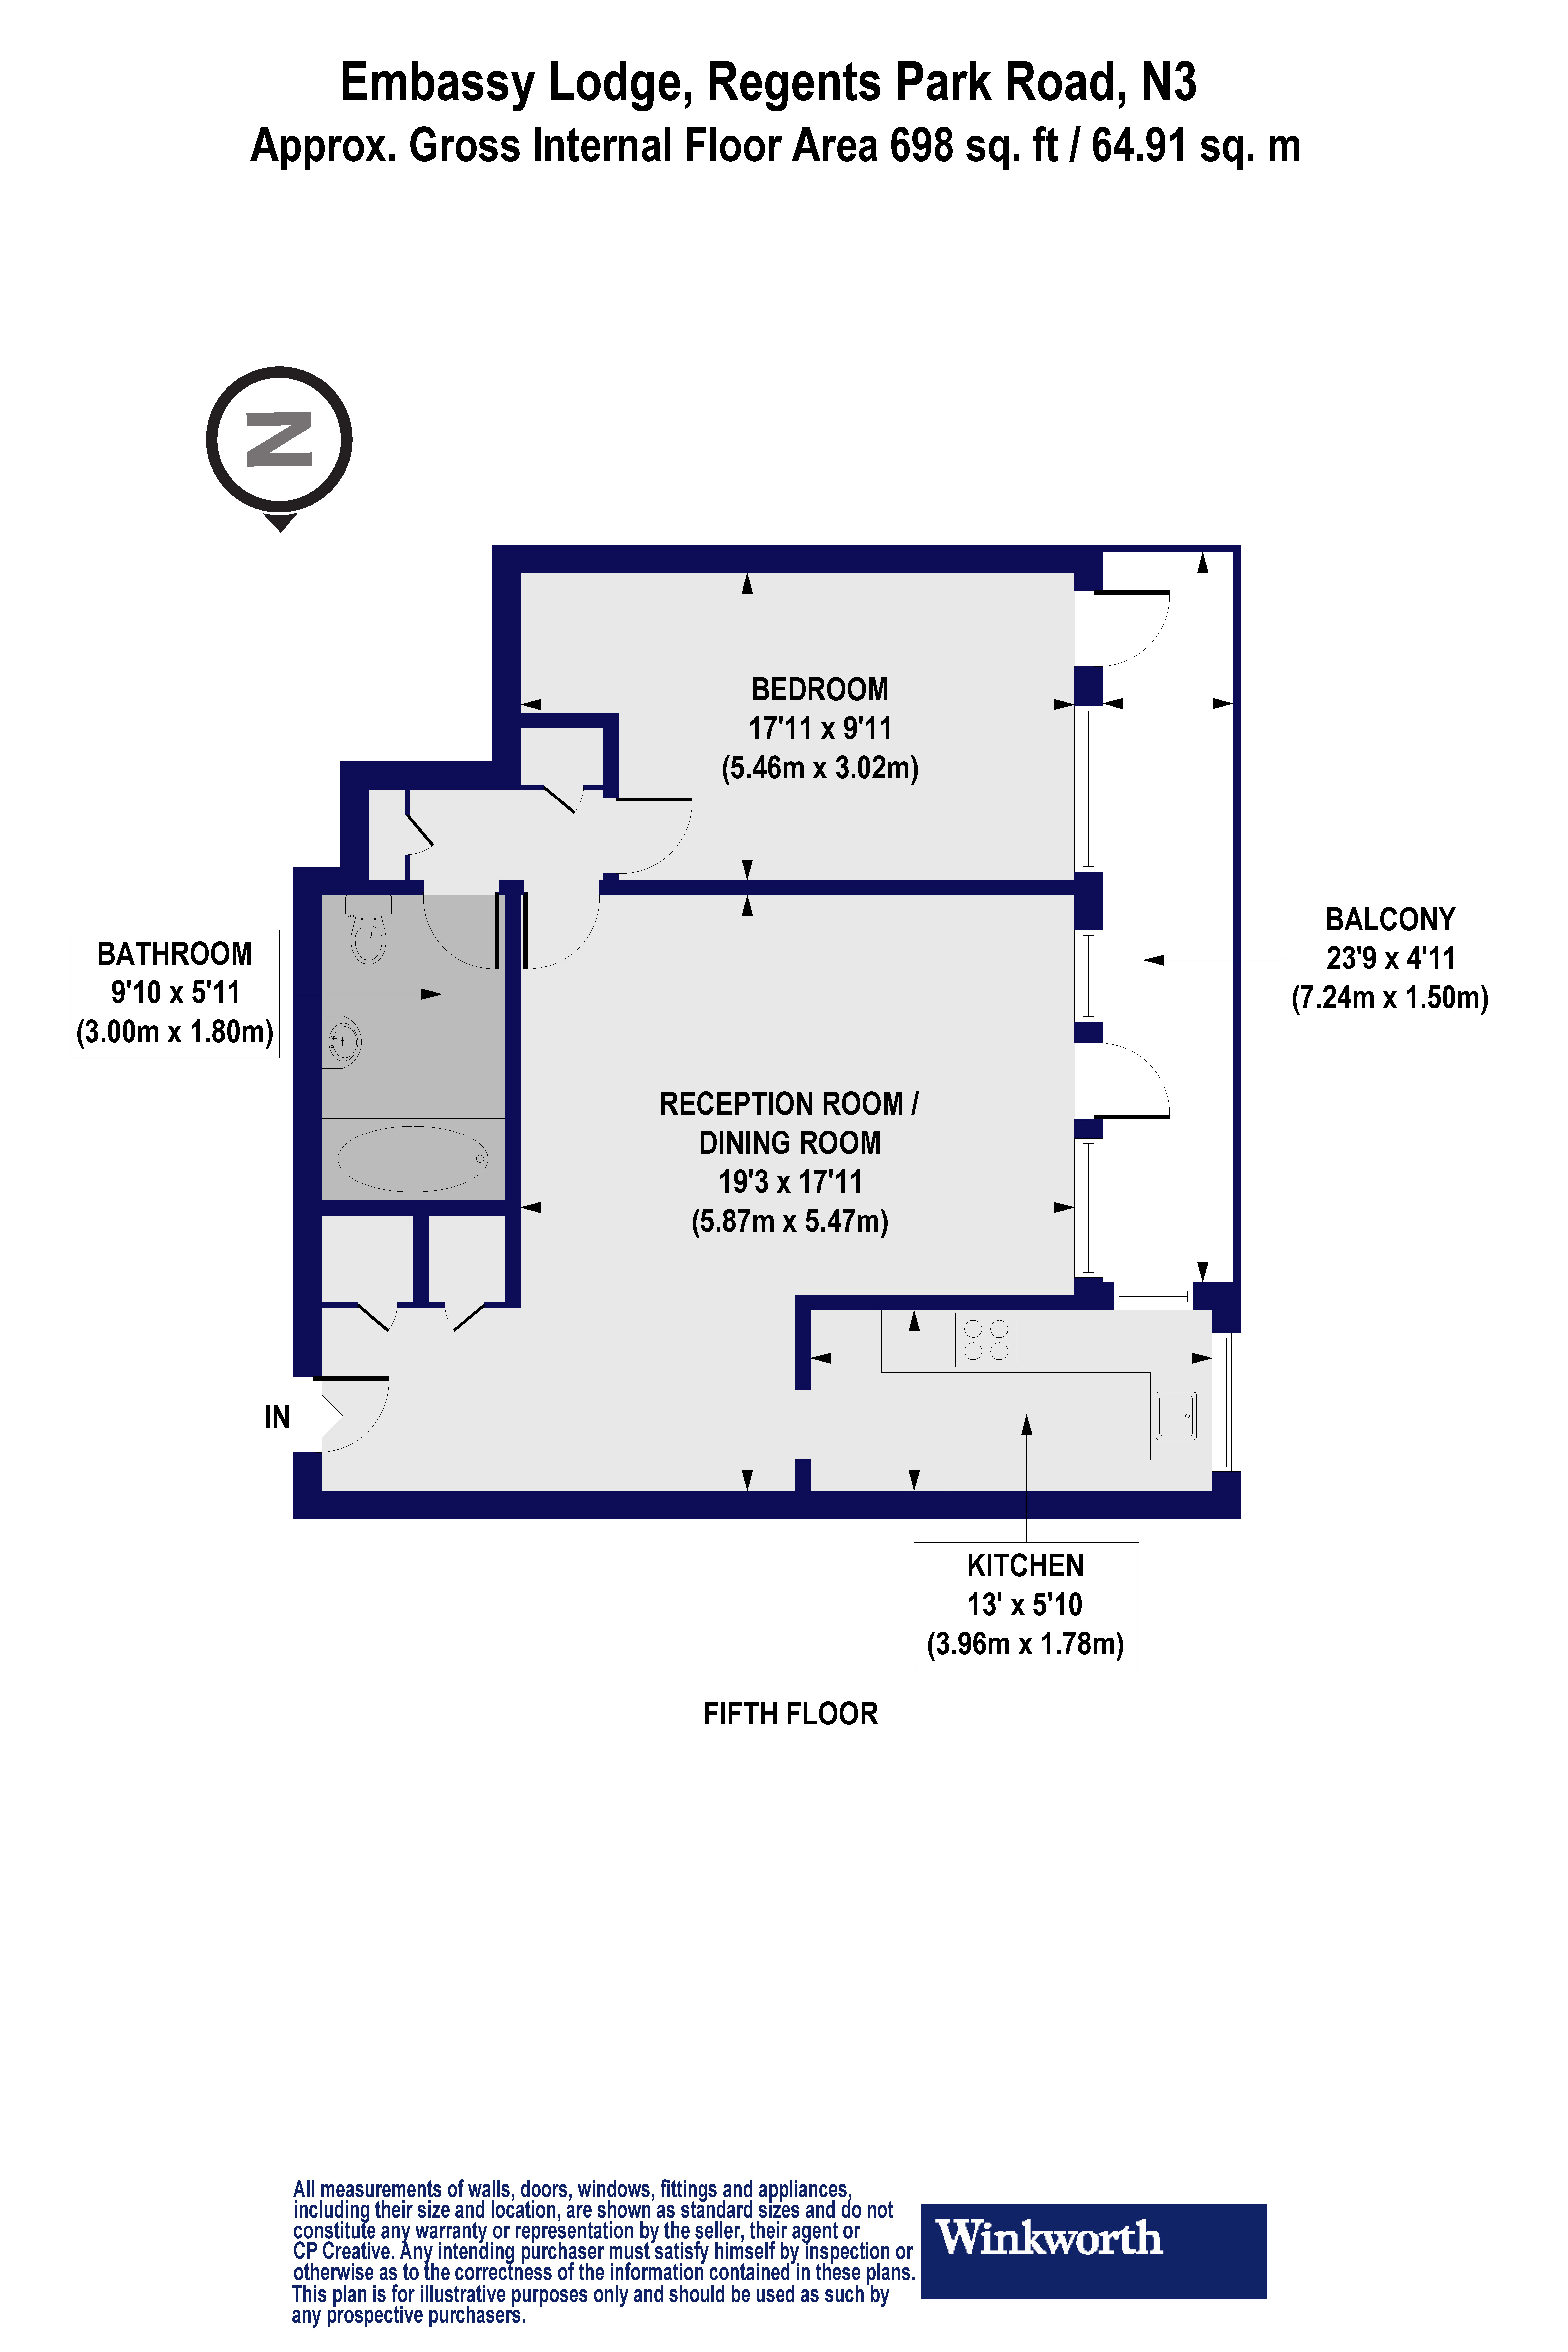 1 Bedrooms Flat to rent in Embassy Lodge, Regents Park Road, London N3